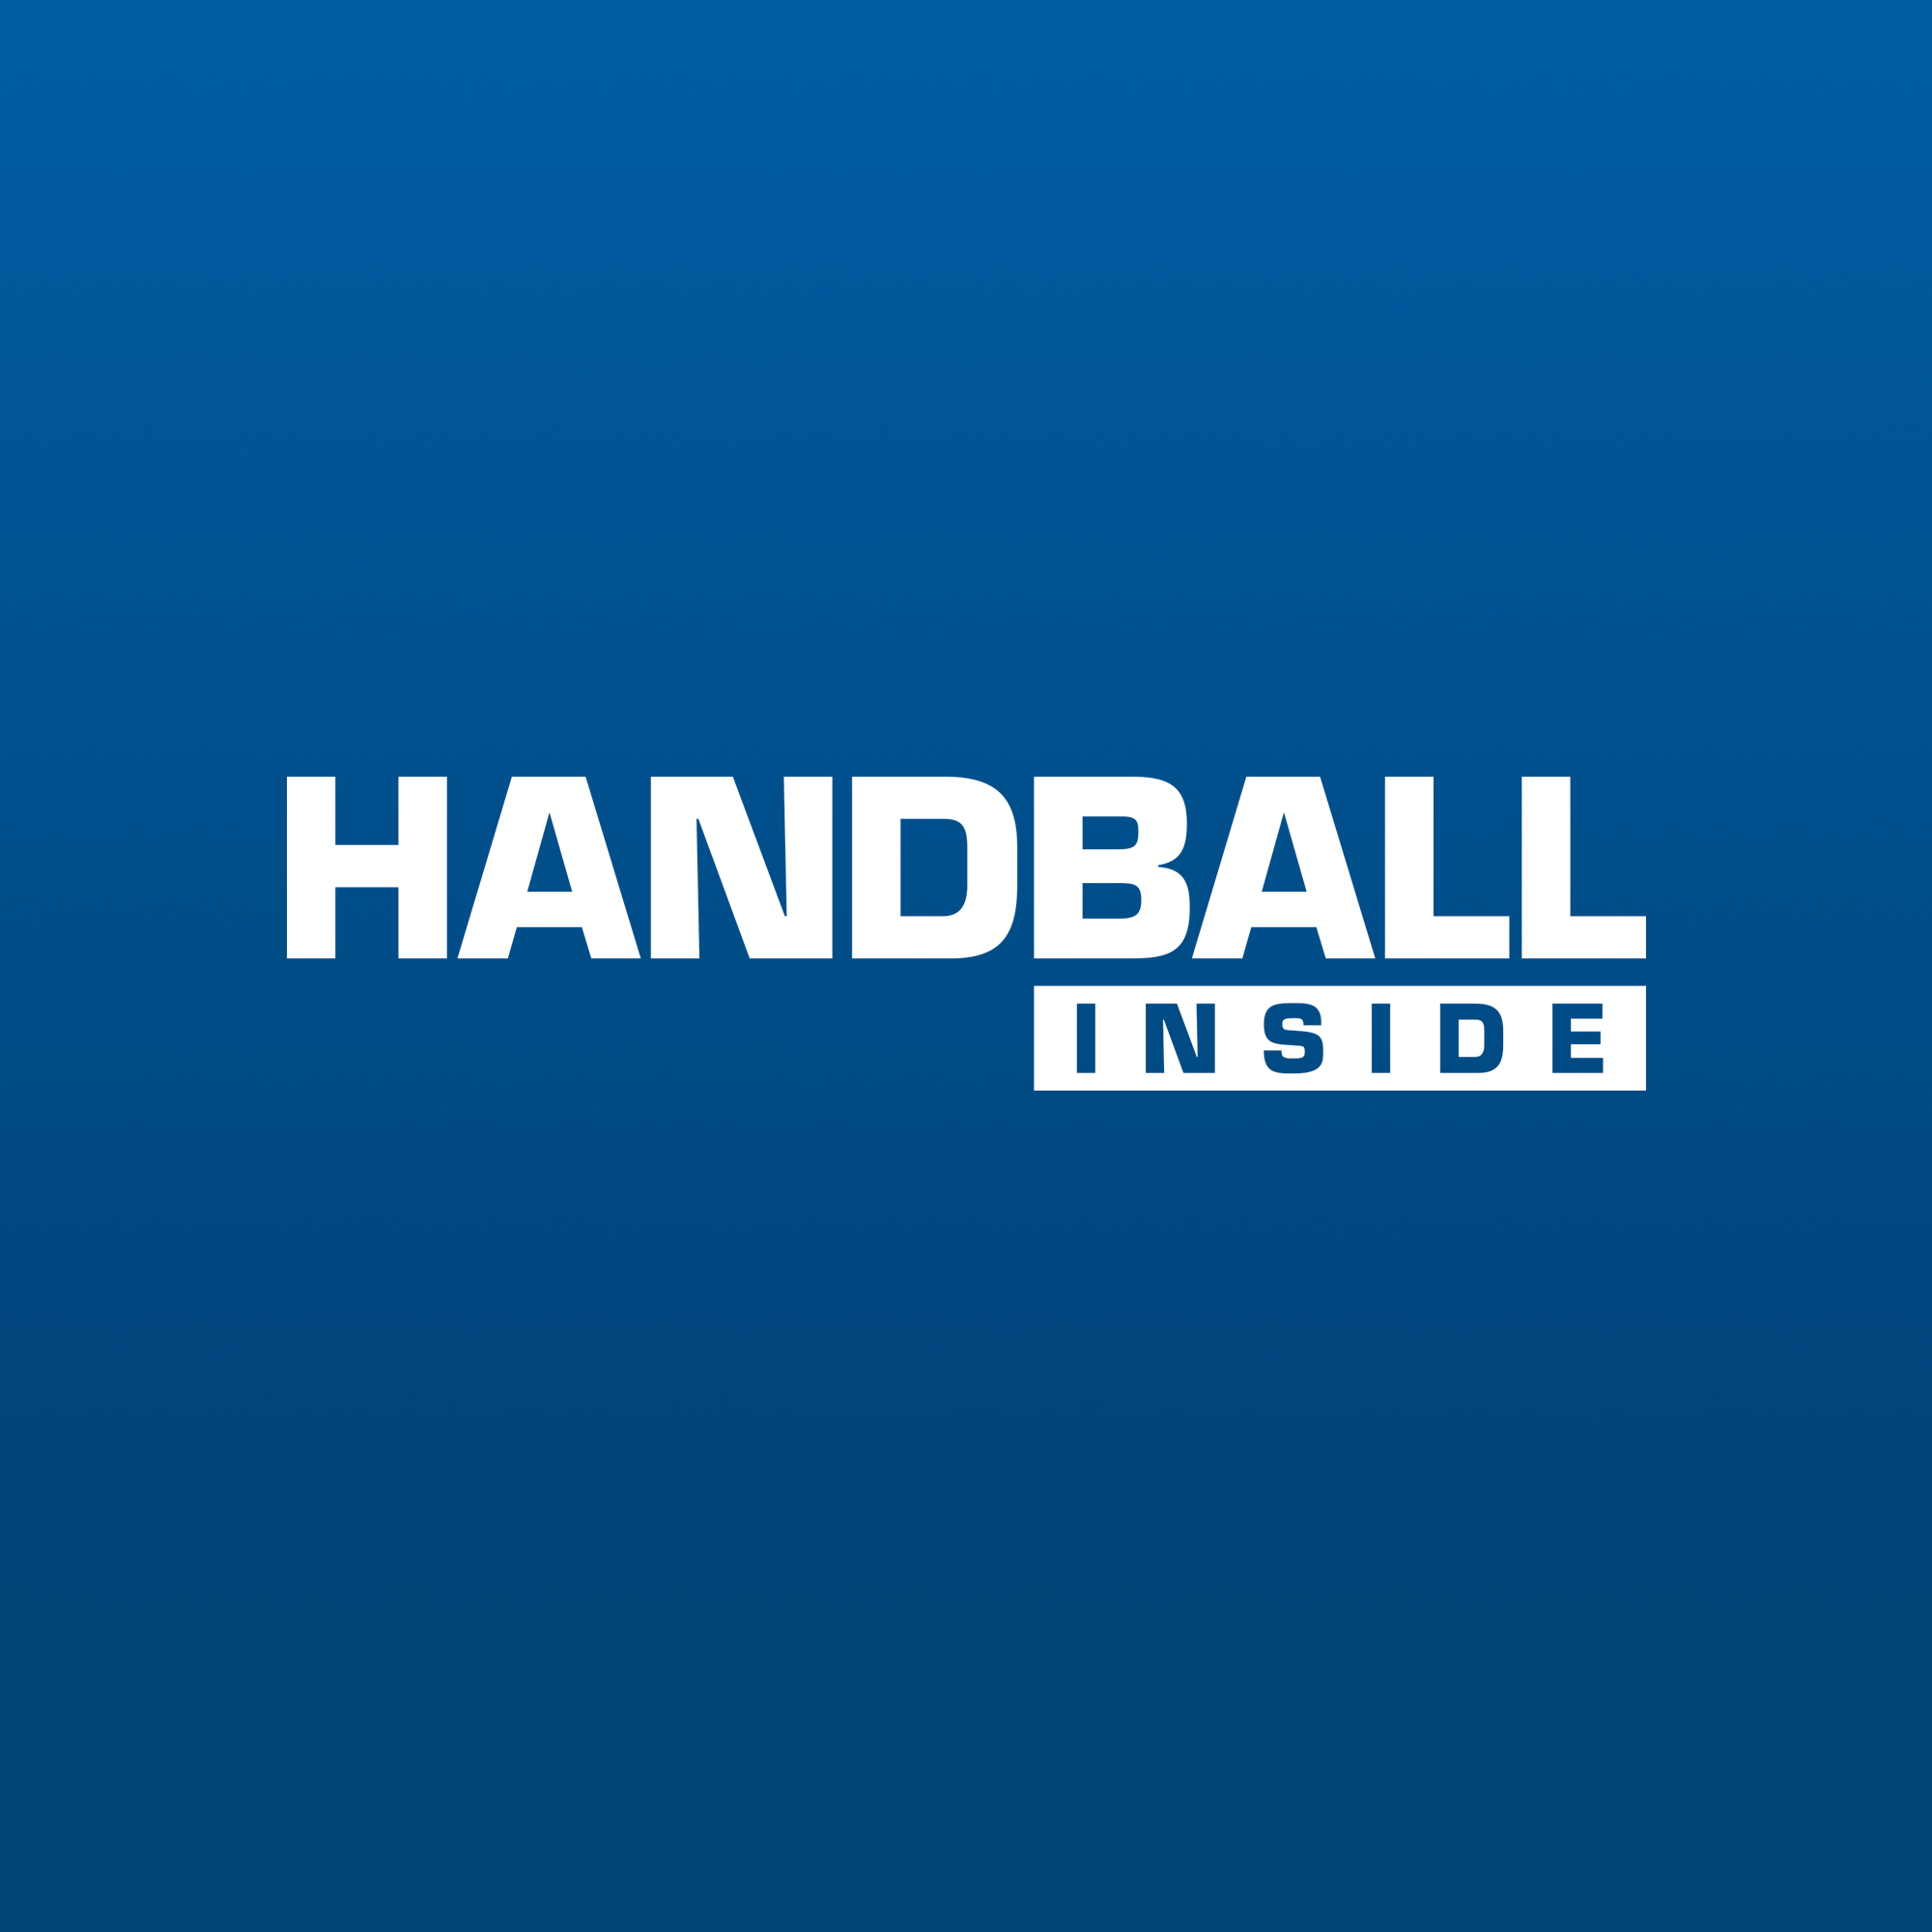 (c) Handballinside.de